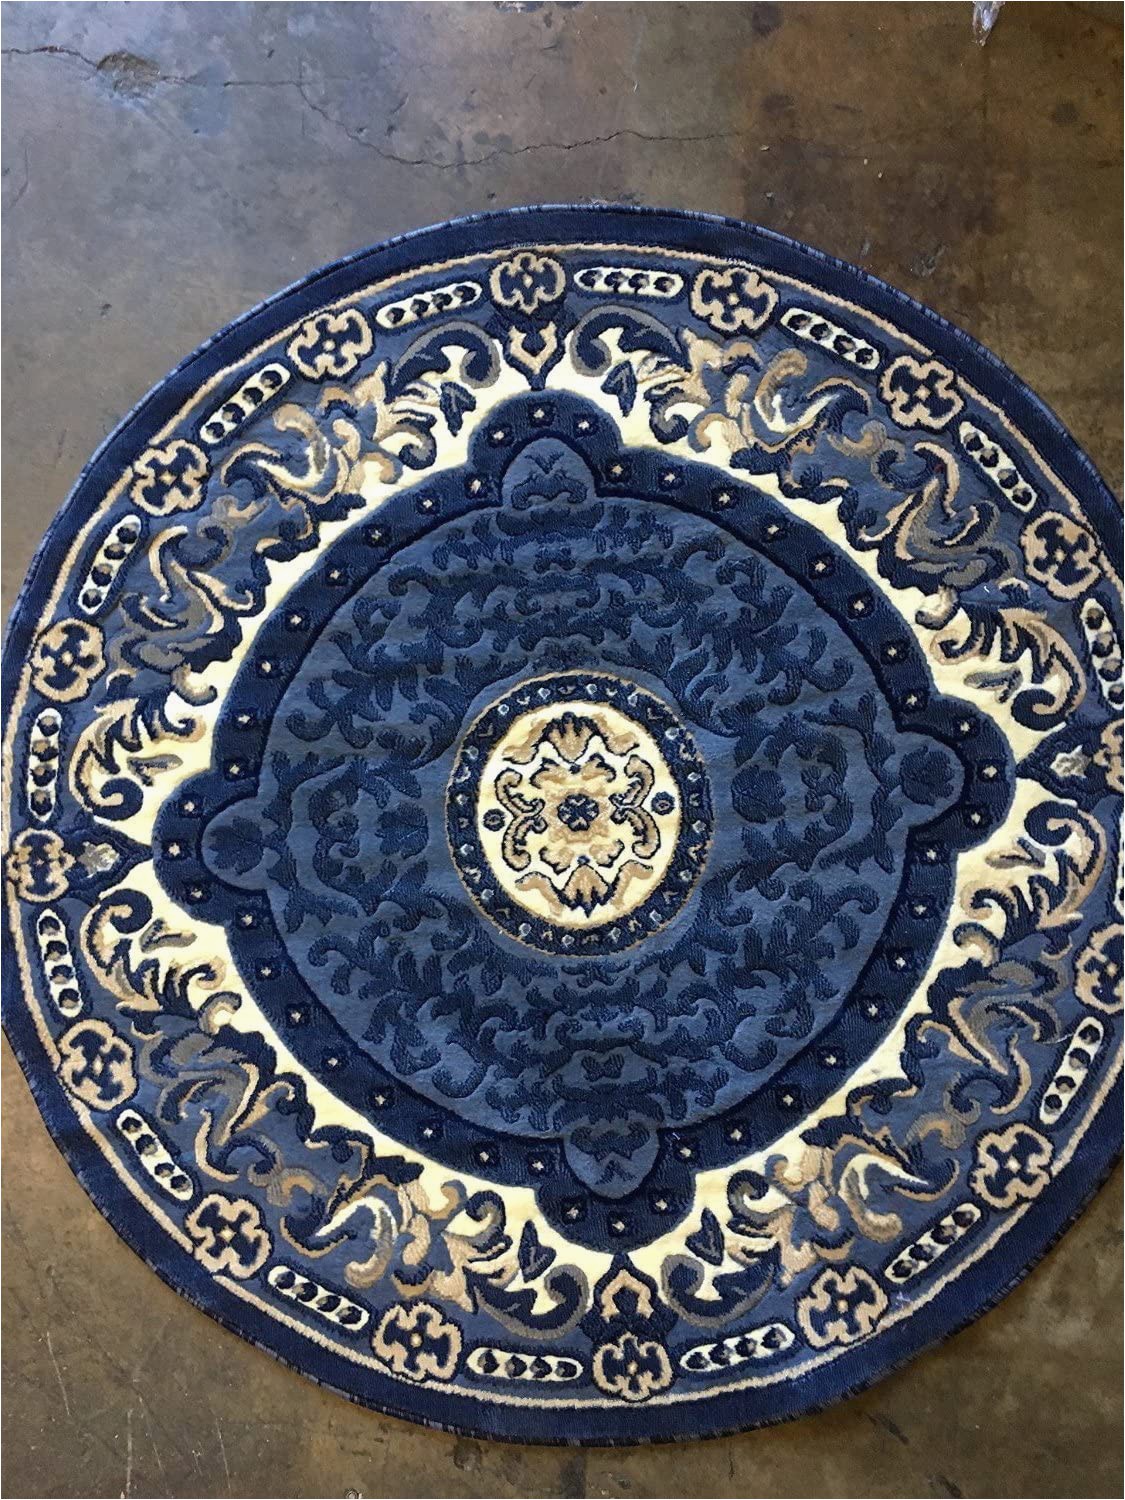 7 Feet Round area Rugs Carpet King Americana Traditional Round oriental Persian area Rug Blue Beige Design 101 7 Feet 3 Inch X 7 Feet 3 Inch